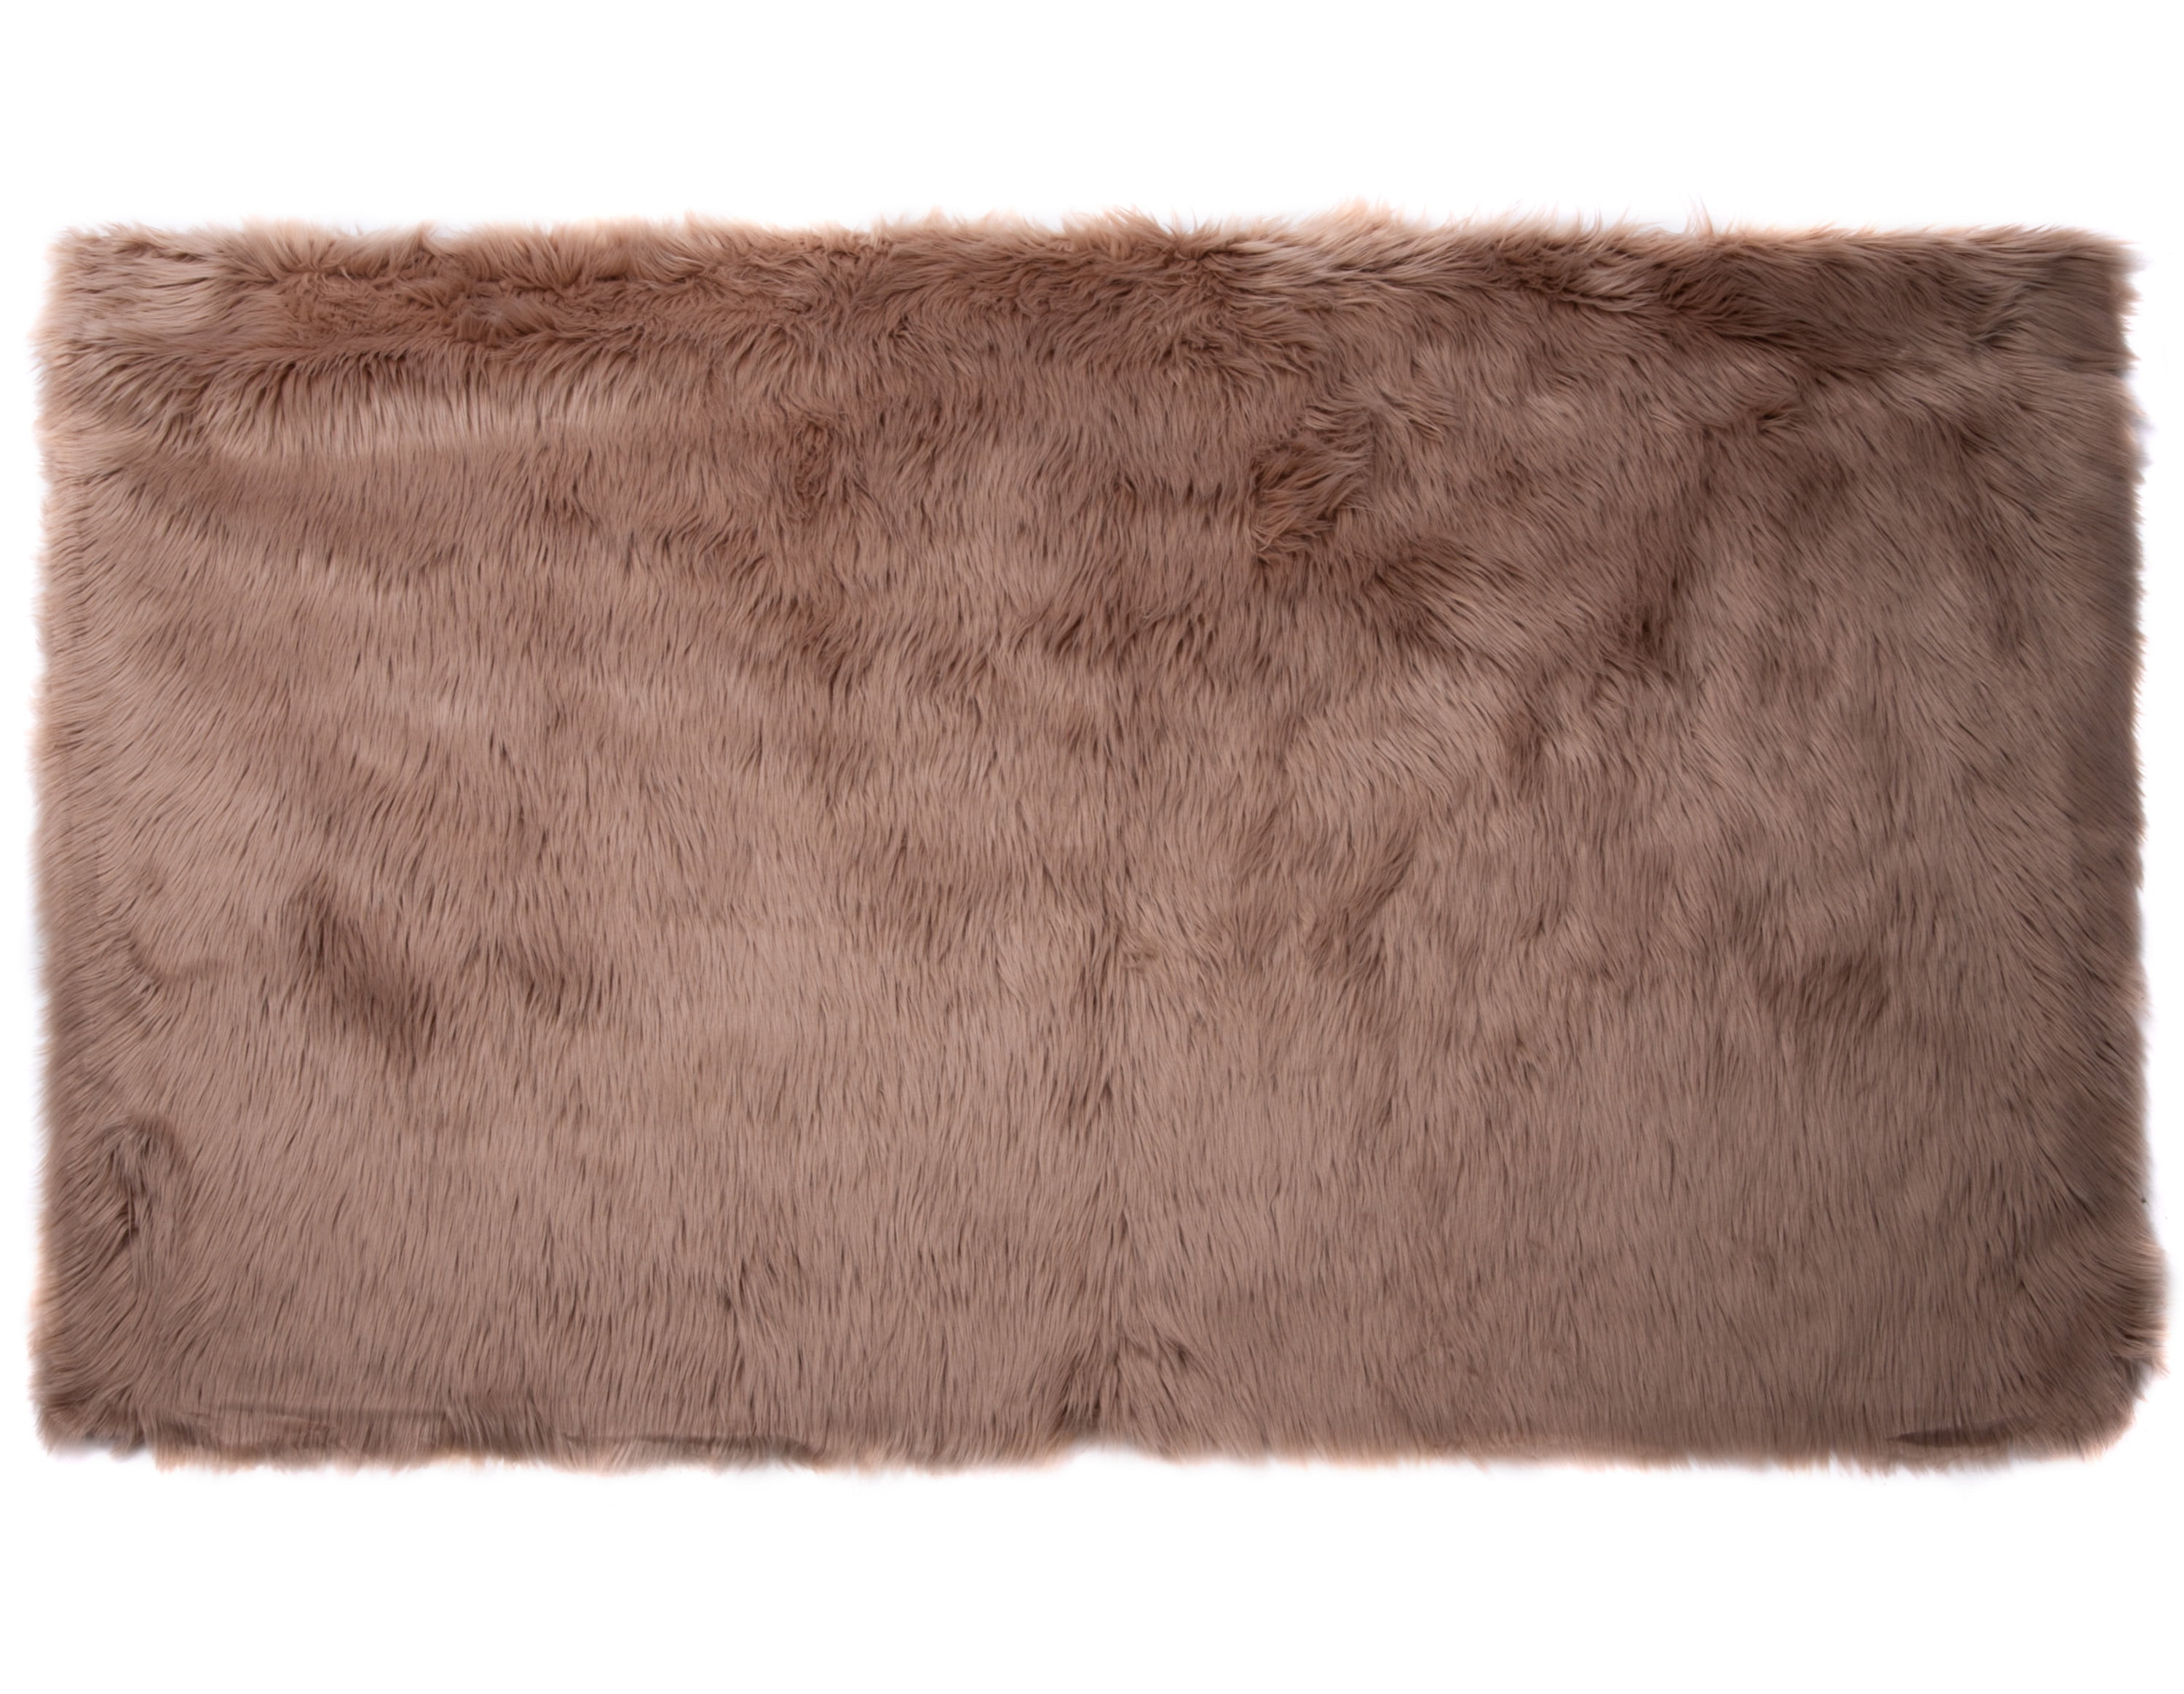 Bedroom Floor Plush Anti-Skid Warm Carpet for Living Room Area 122 cm x 183 cm Mind Reader Faux Sheepskin Rug Beige High Pile 4′ x 6′ Vegan Materials 